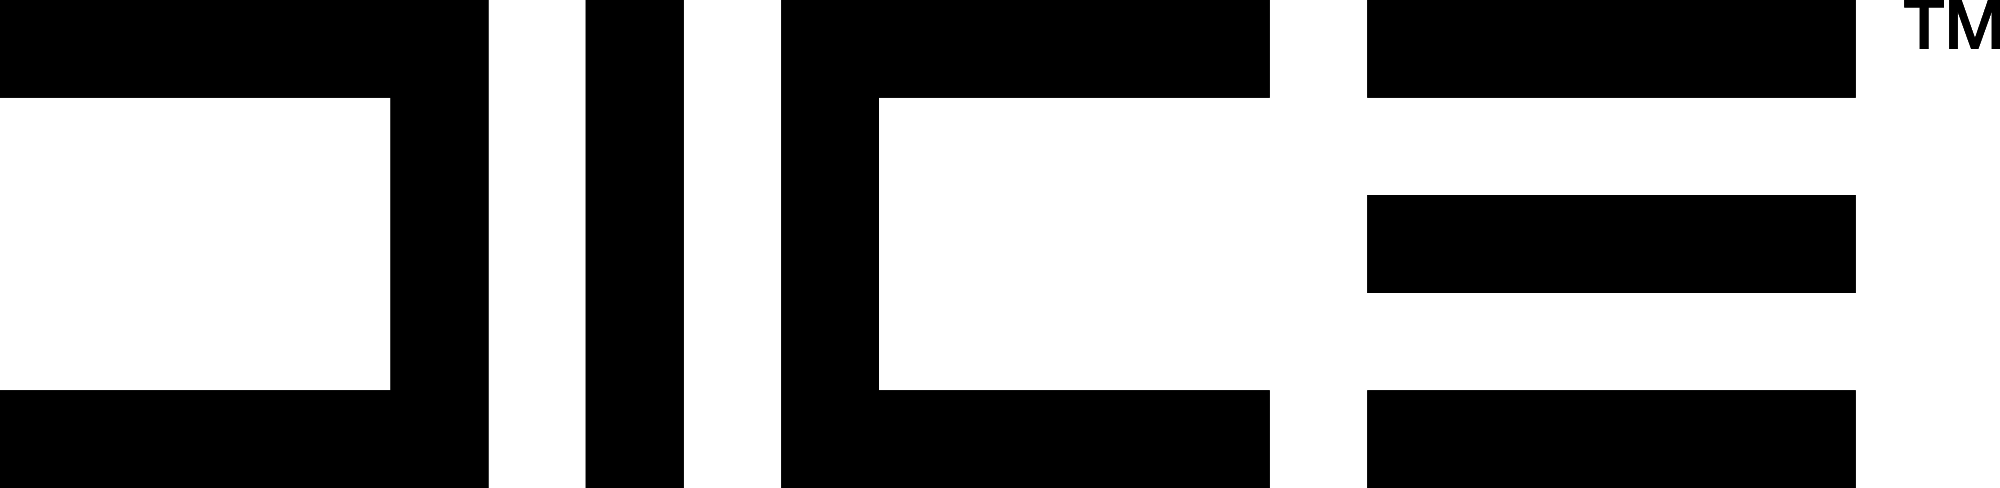 dice-logotype-black